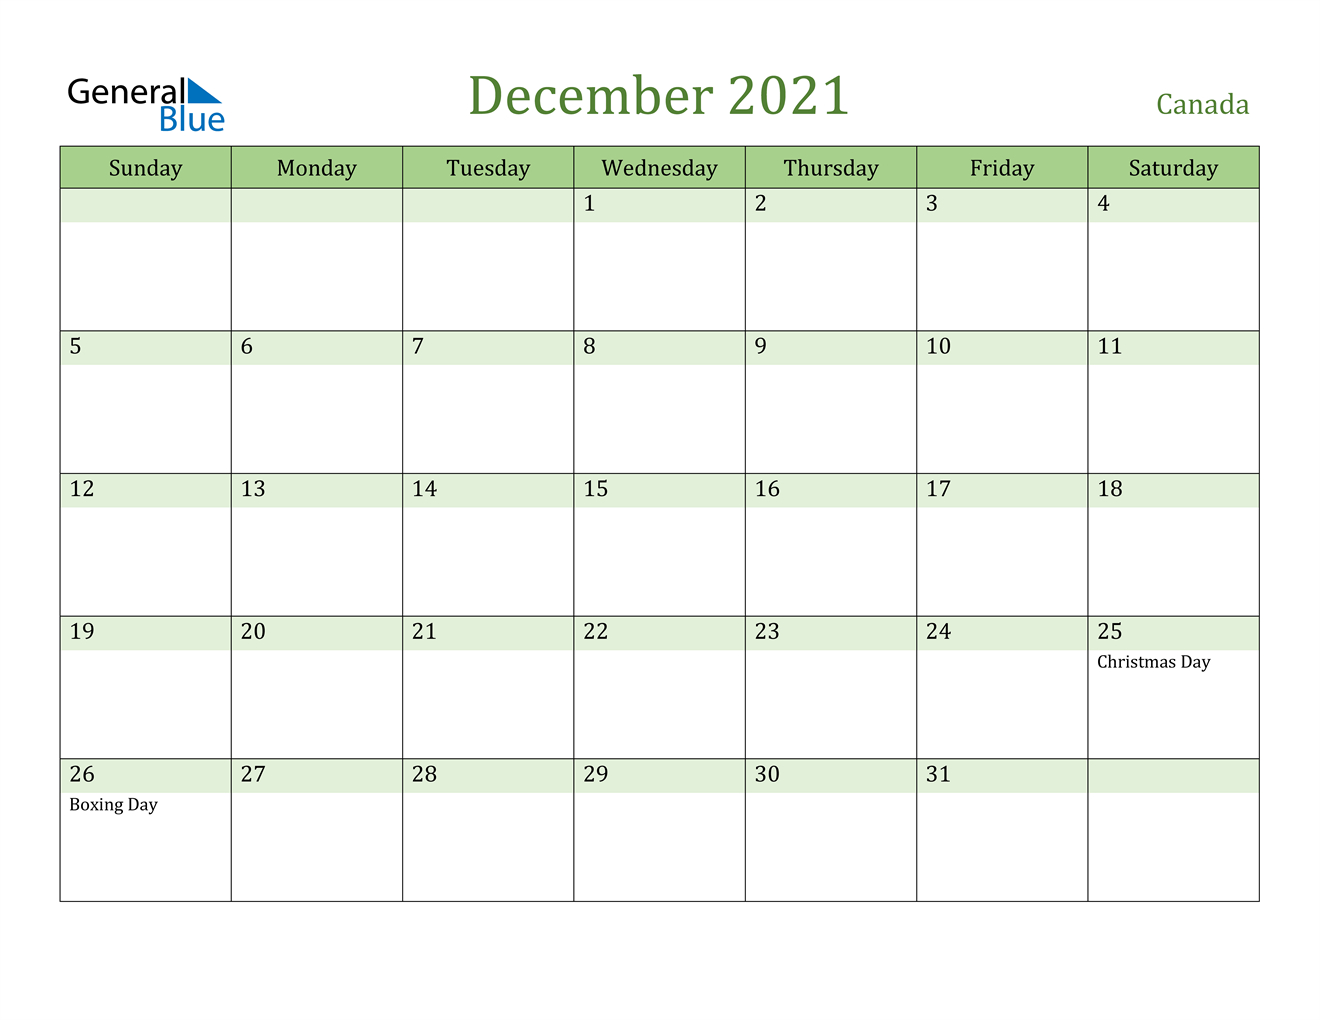 December 2021 Calendar - Canada